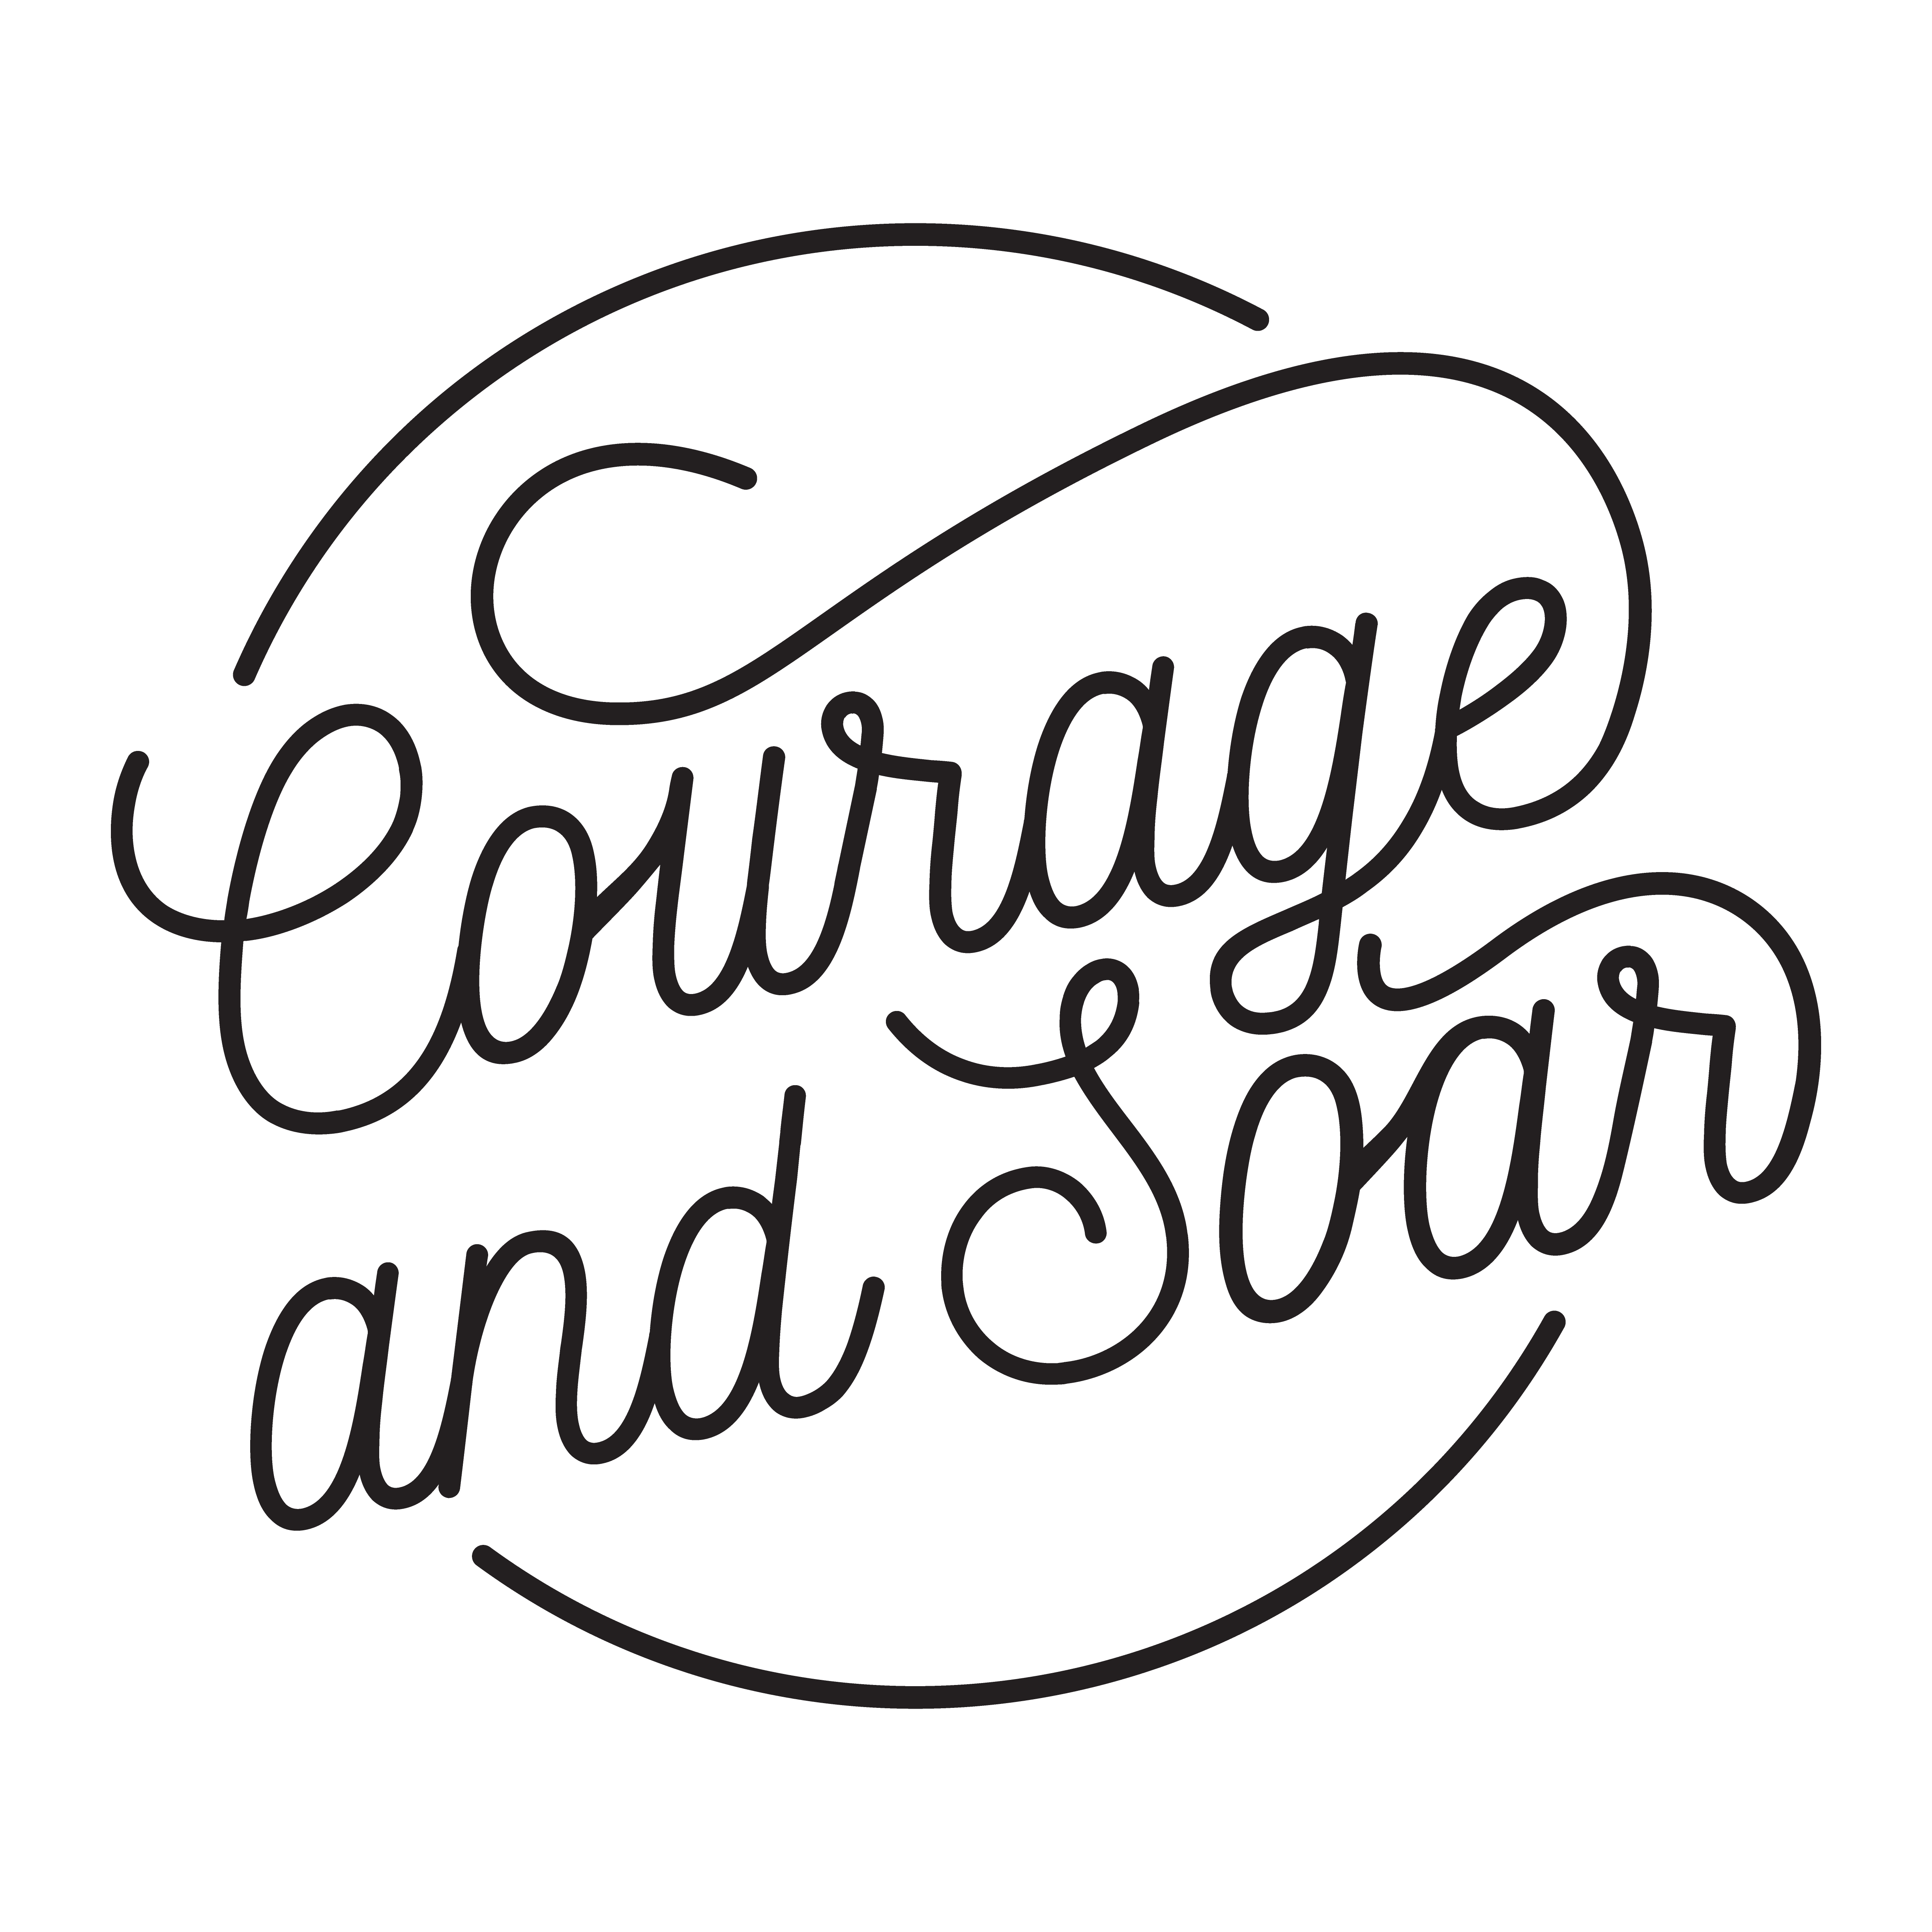 Courage & Soar